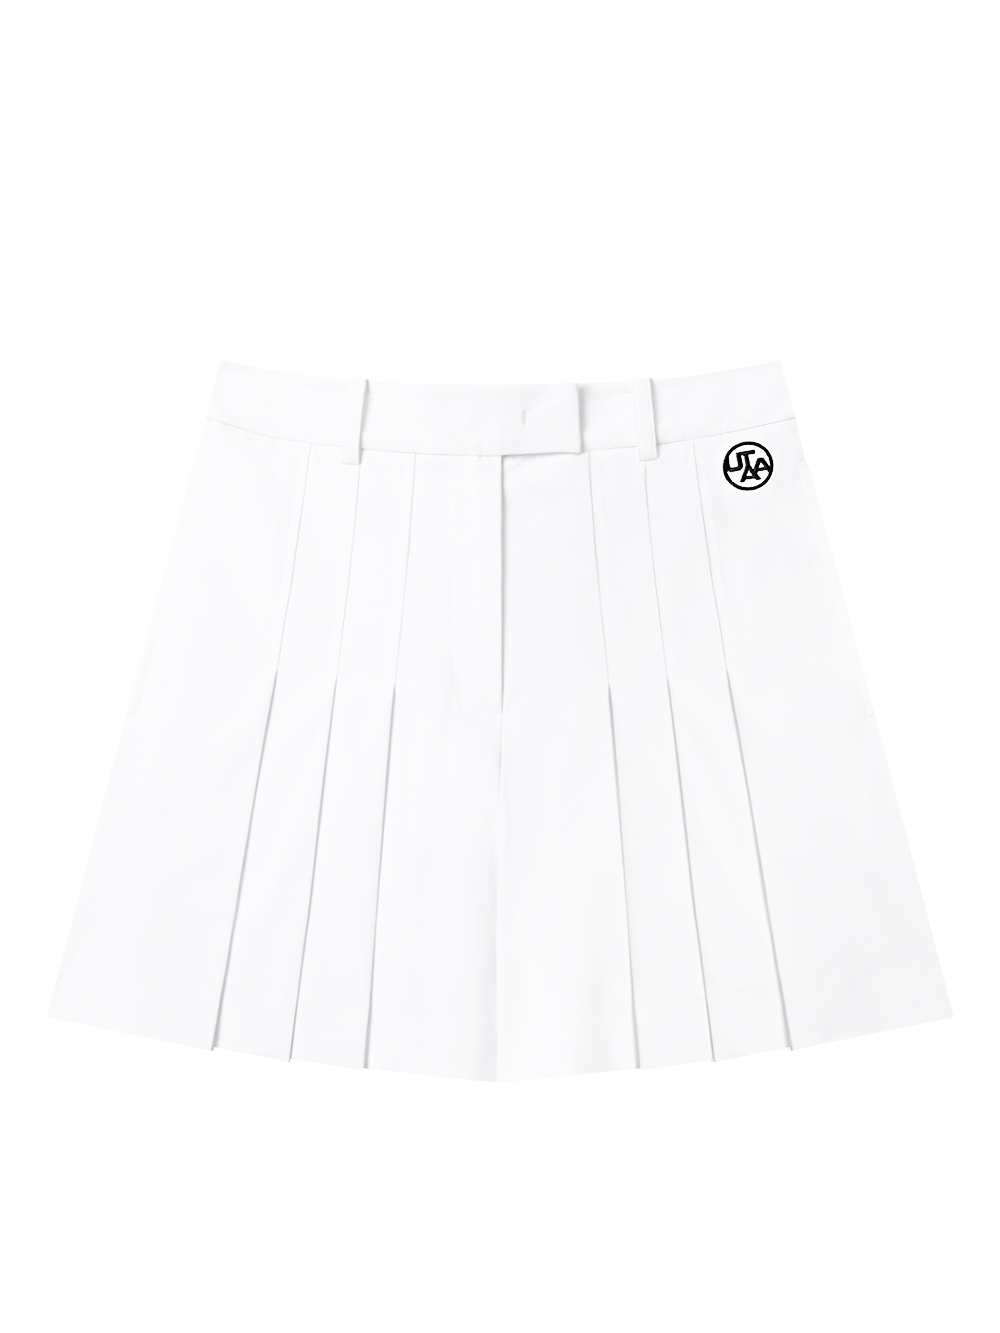 UTAA Ideal Half Pleats Skirt Pants : White (UD2PSF173WH)